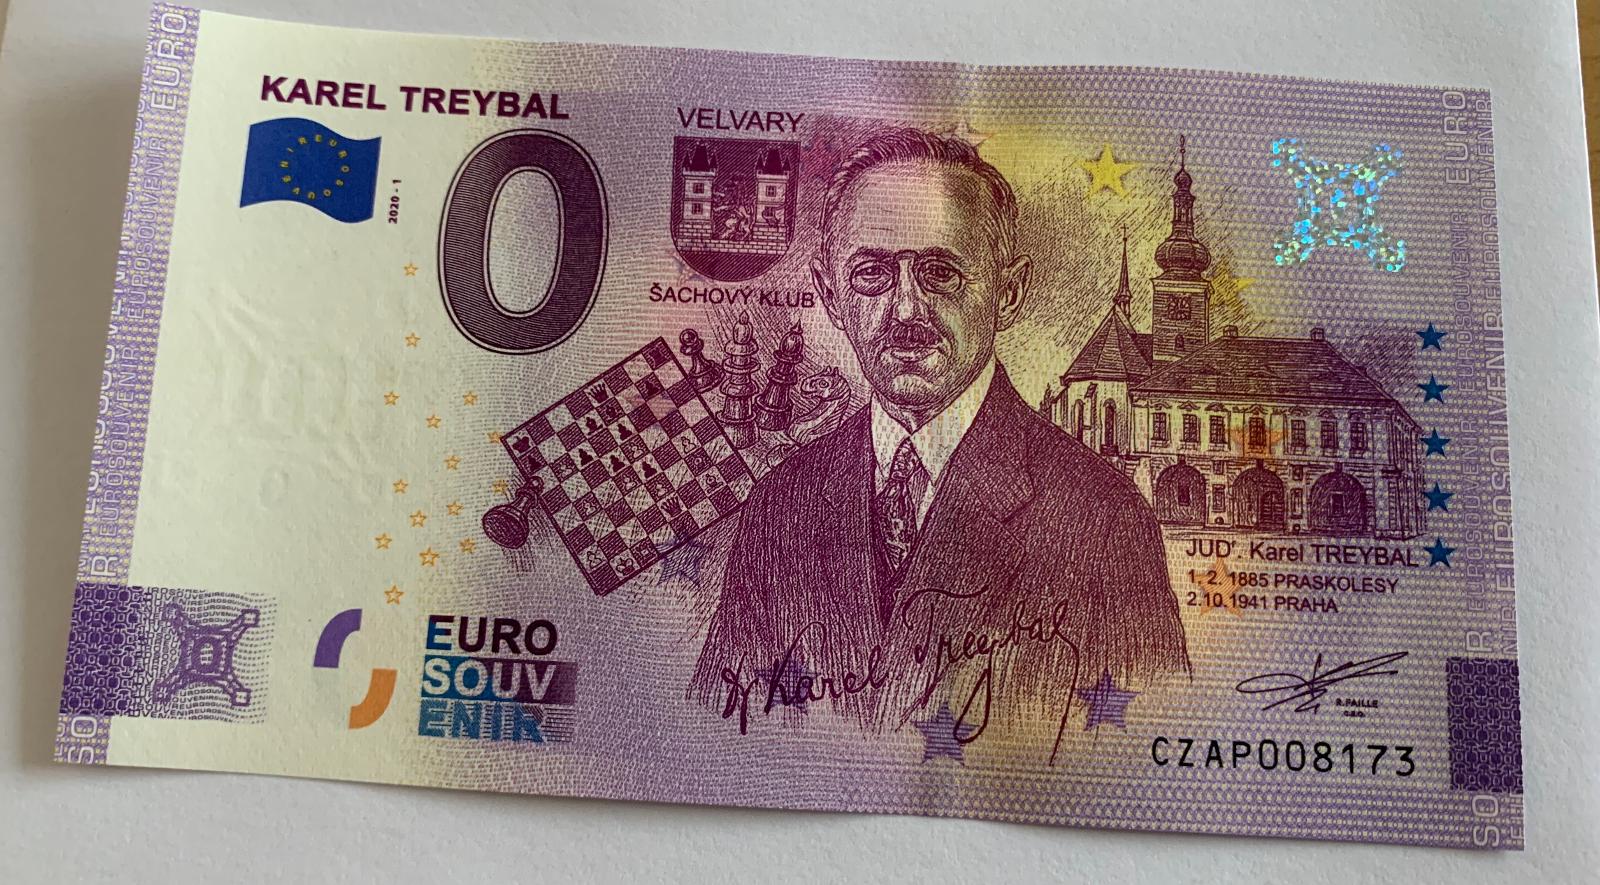 0 Euro Souvenir bankovka - Karel Treybal - Anniversary - Zberateľstvo